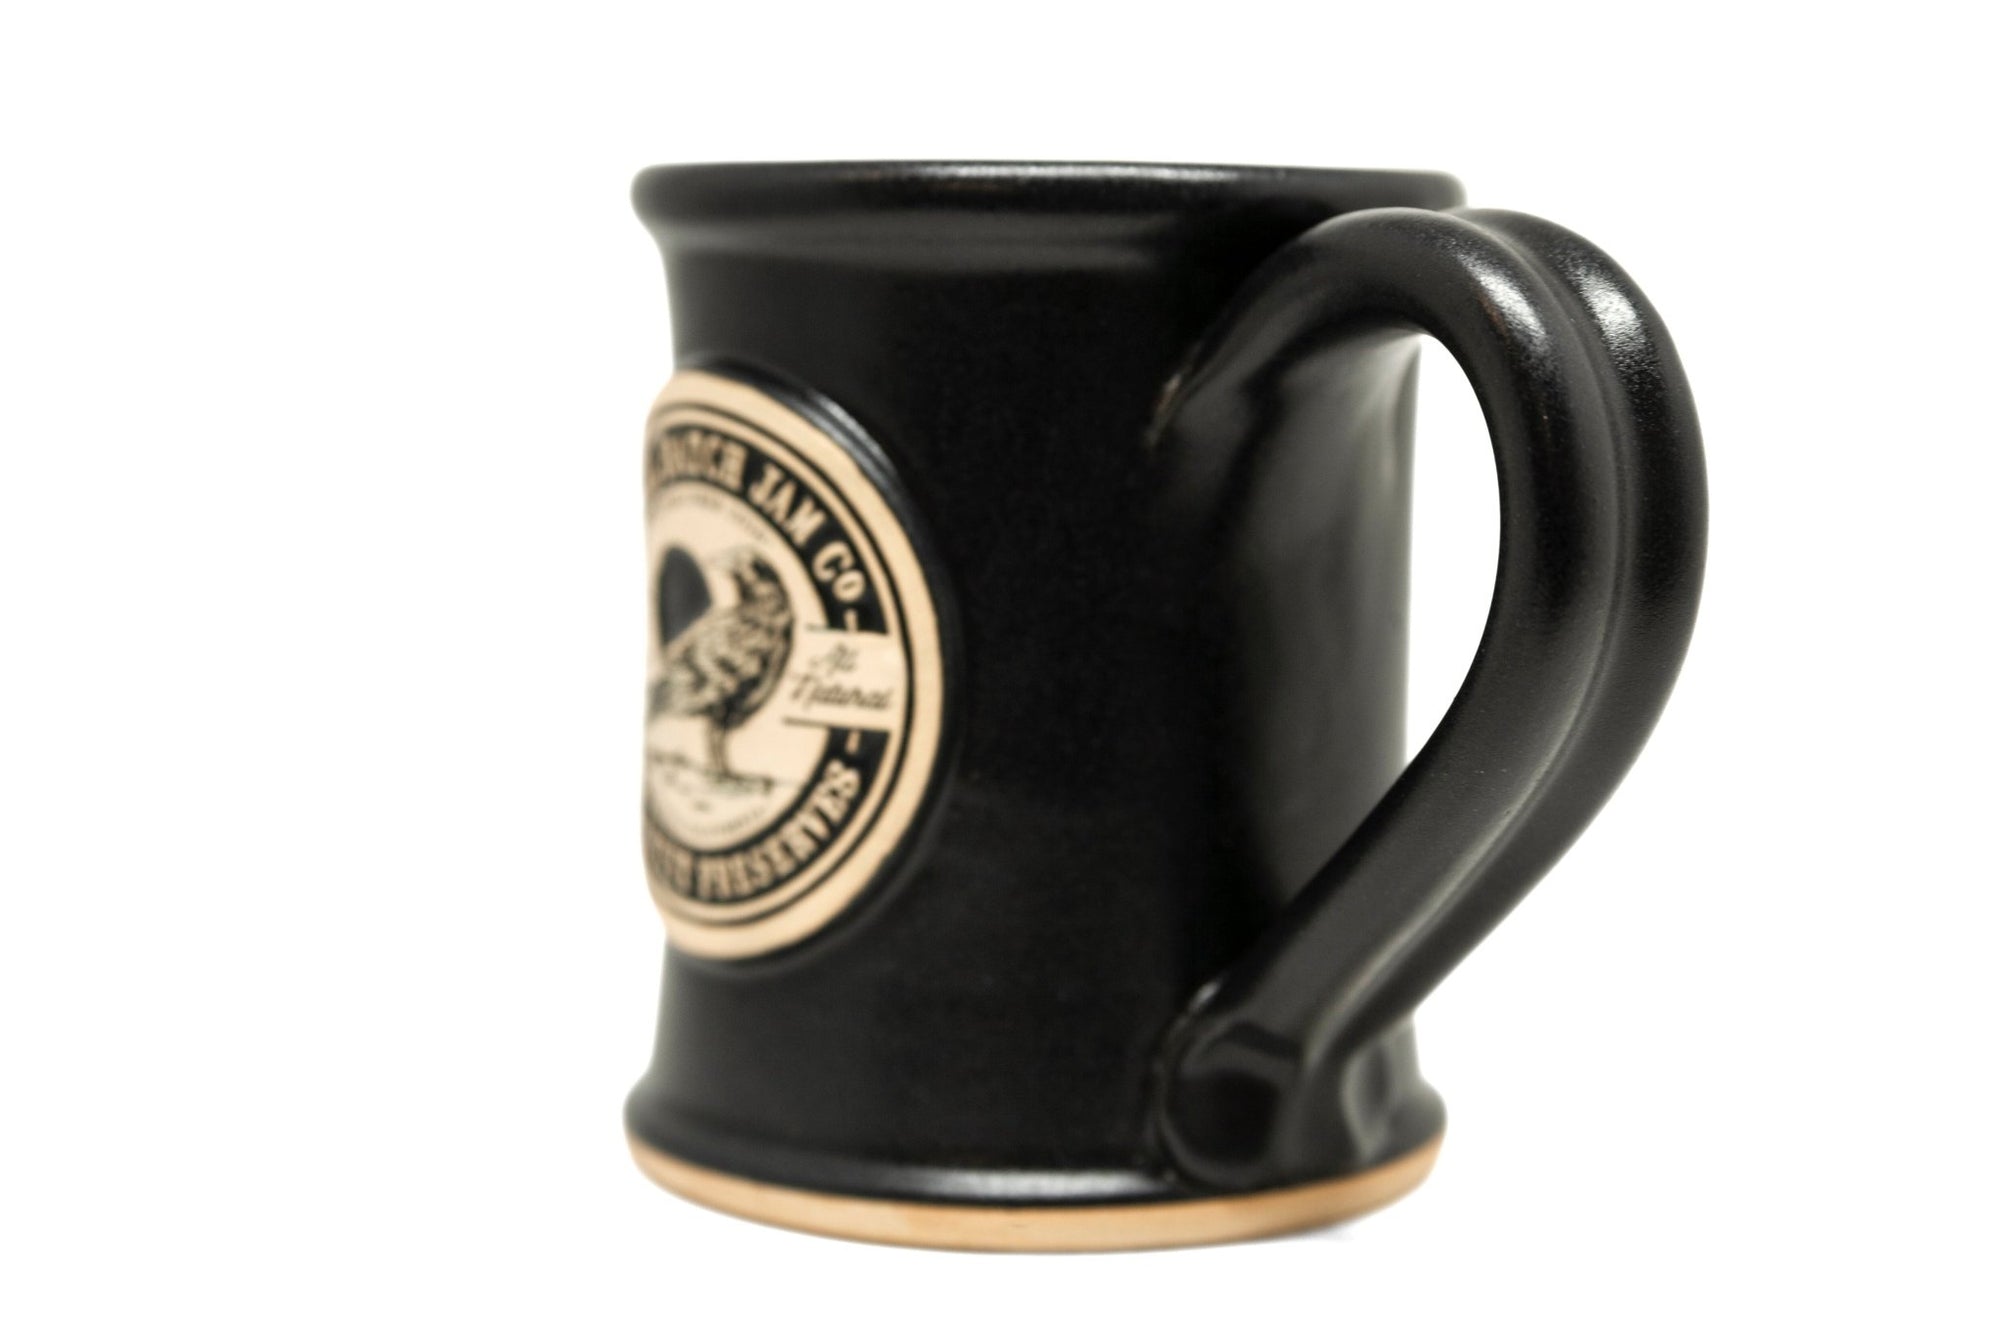 Handmade SBJC Slimline Coffee Mug - Black 14 oz. - Small Batch Jam Co